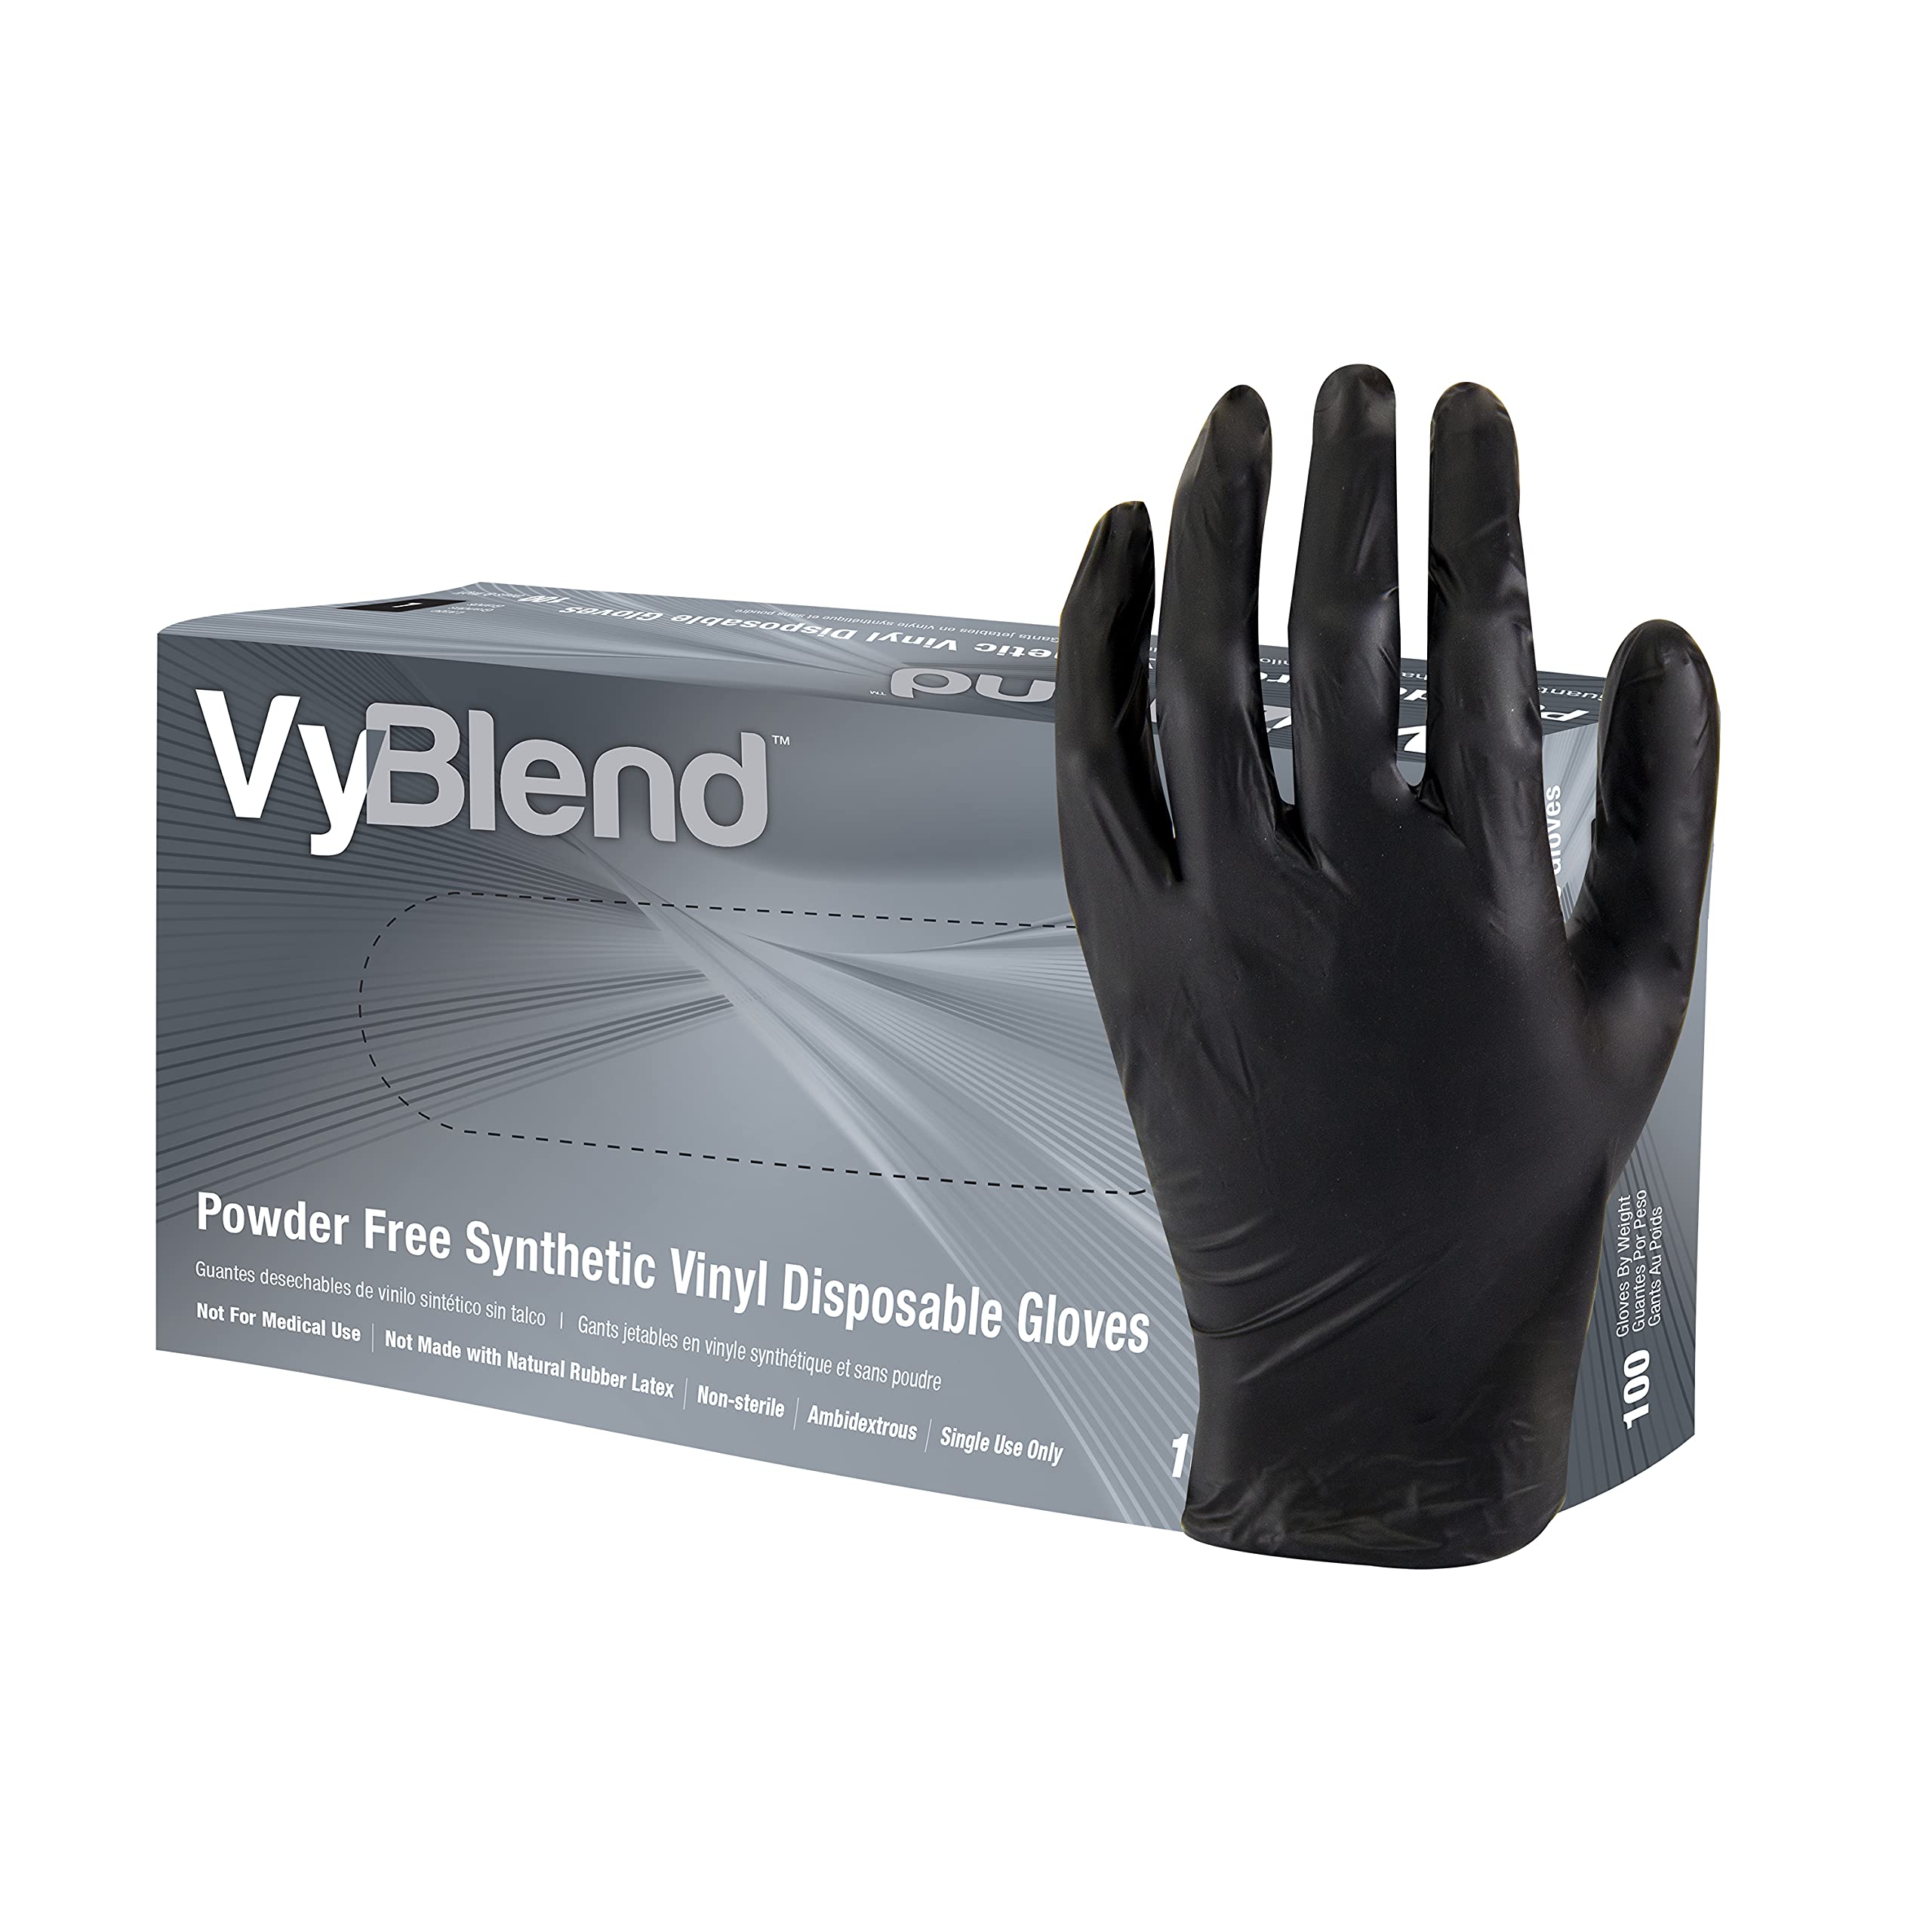 Adenna VyBlend Vinyl Powder Free Disposable Glove, Black, Extra Large, Box of 100